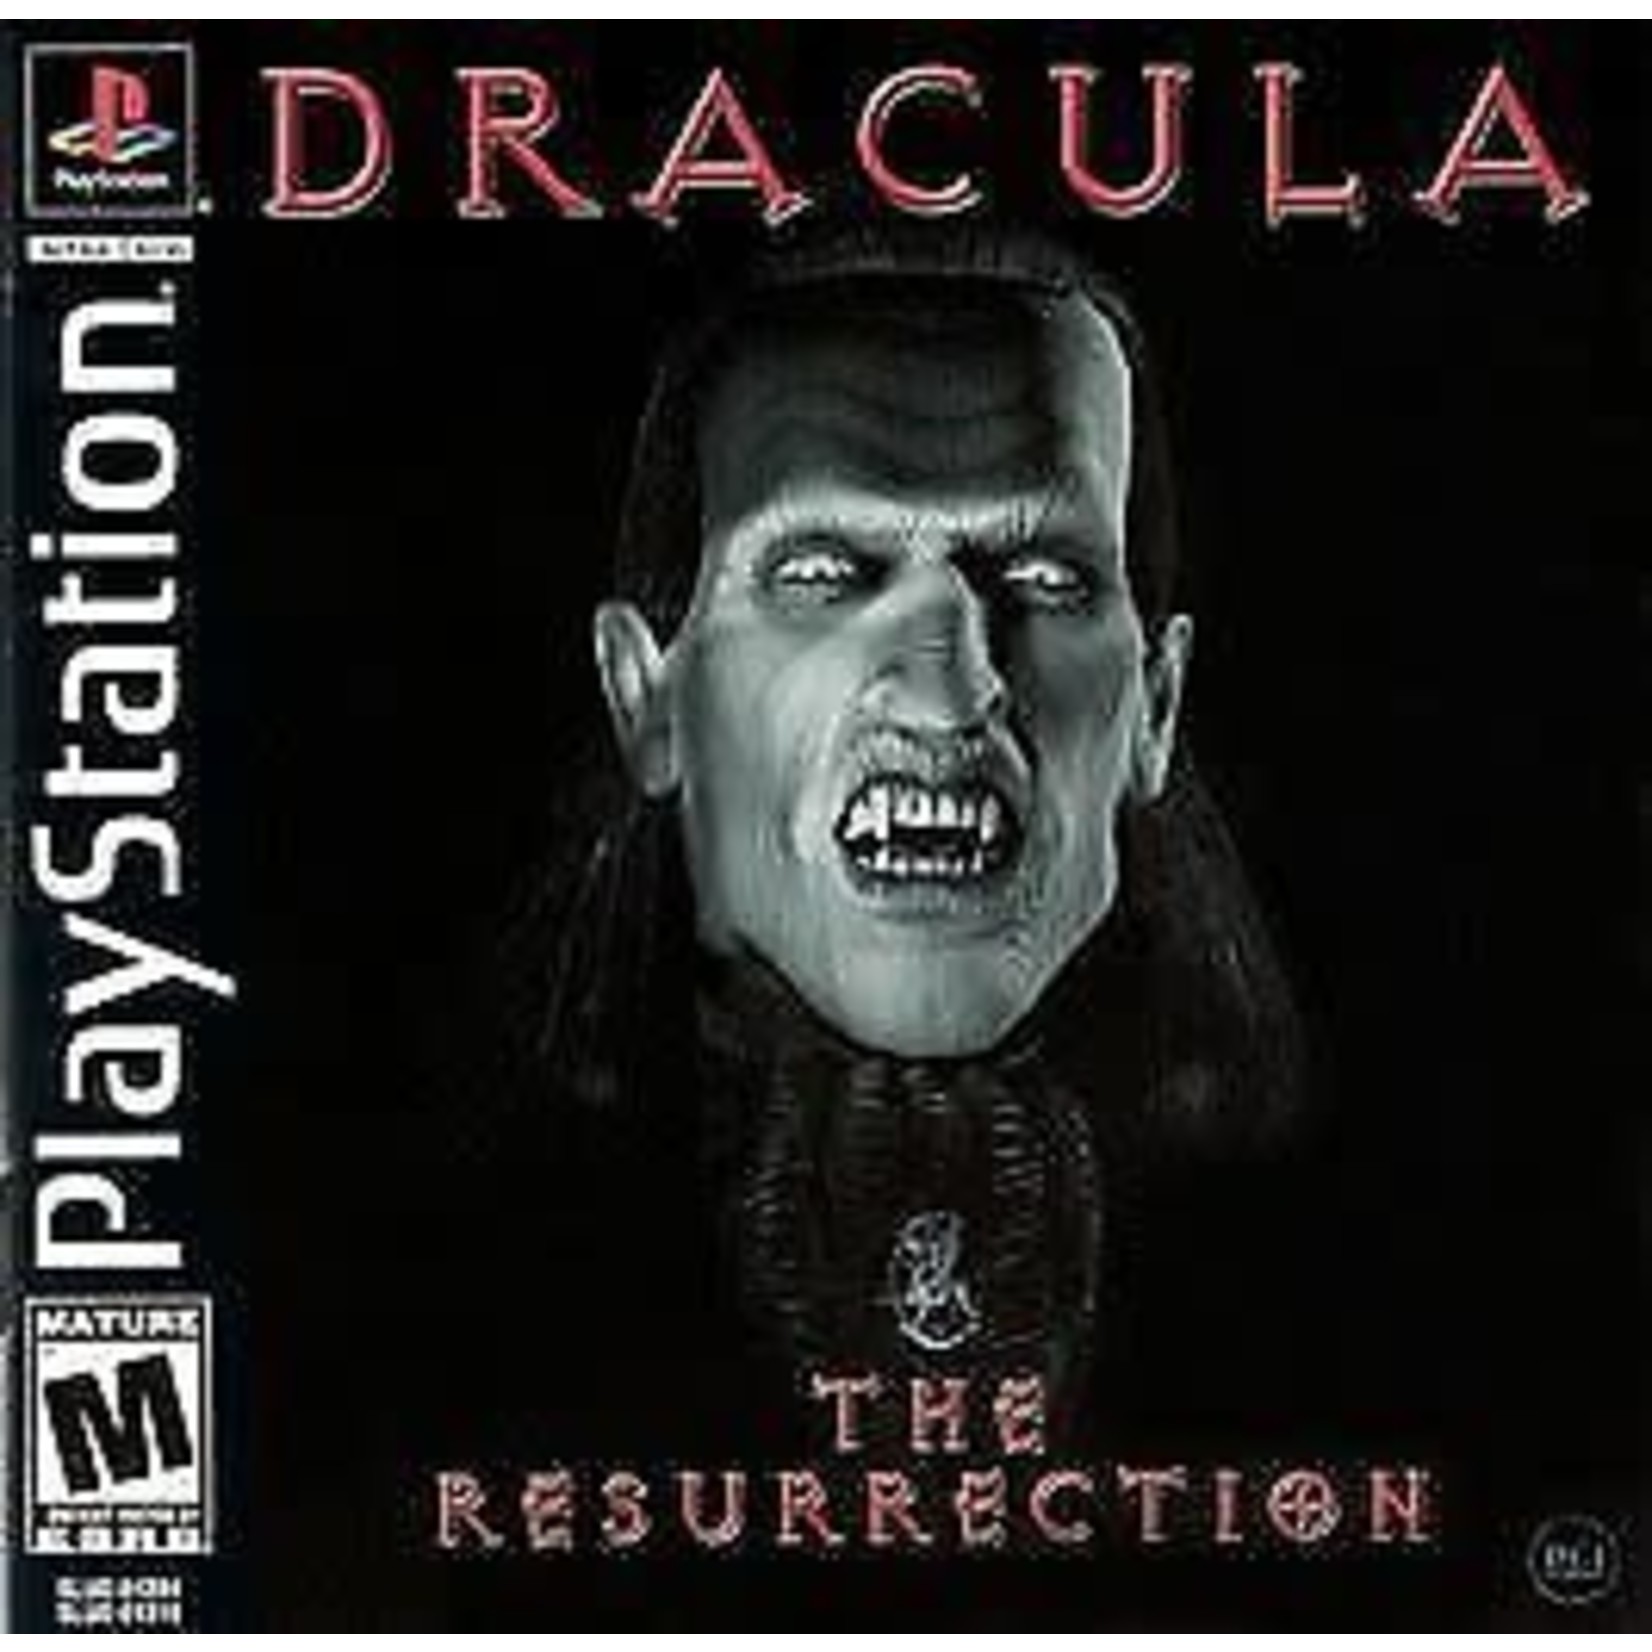 PS1U-Dracula: The Resurrection